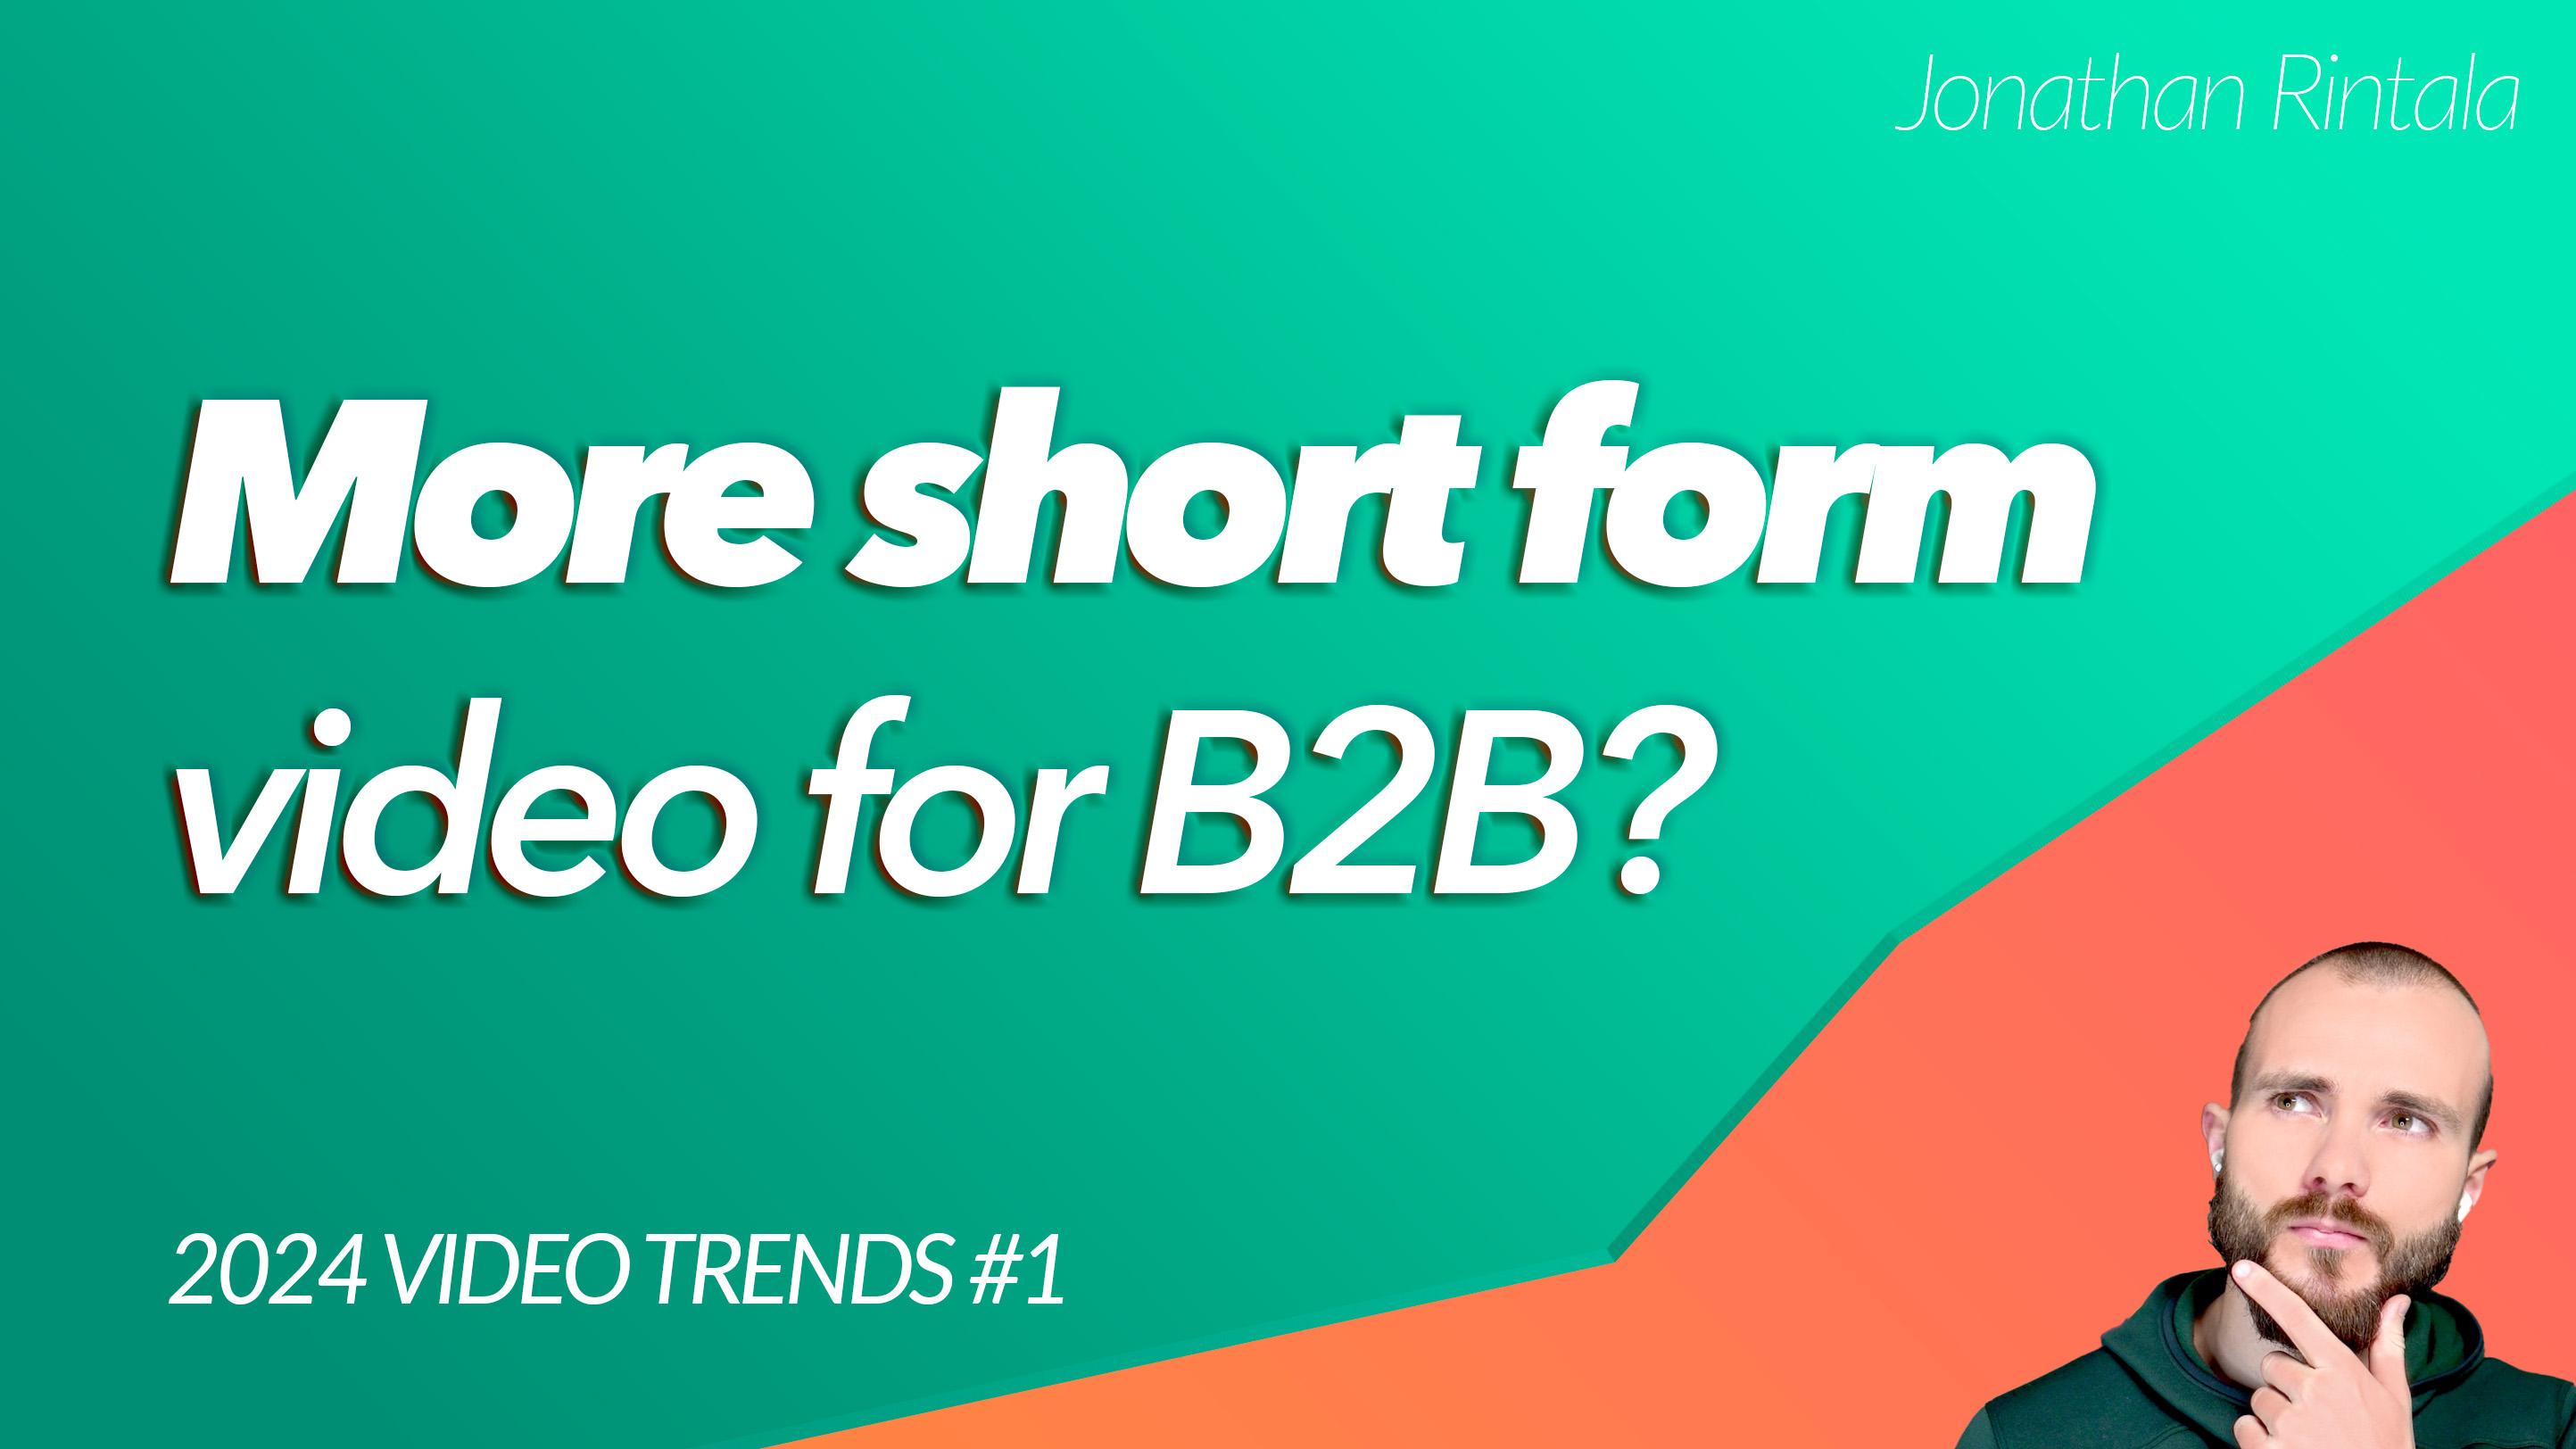 B2B Video Trend: More short form video for b2b?